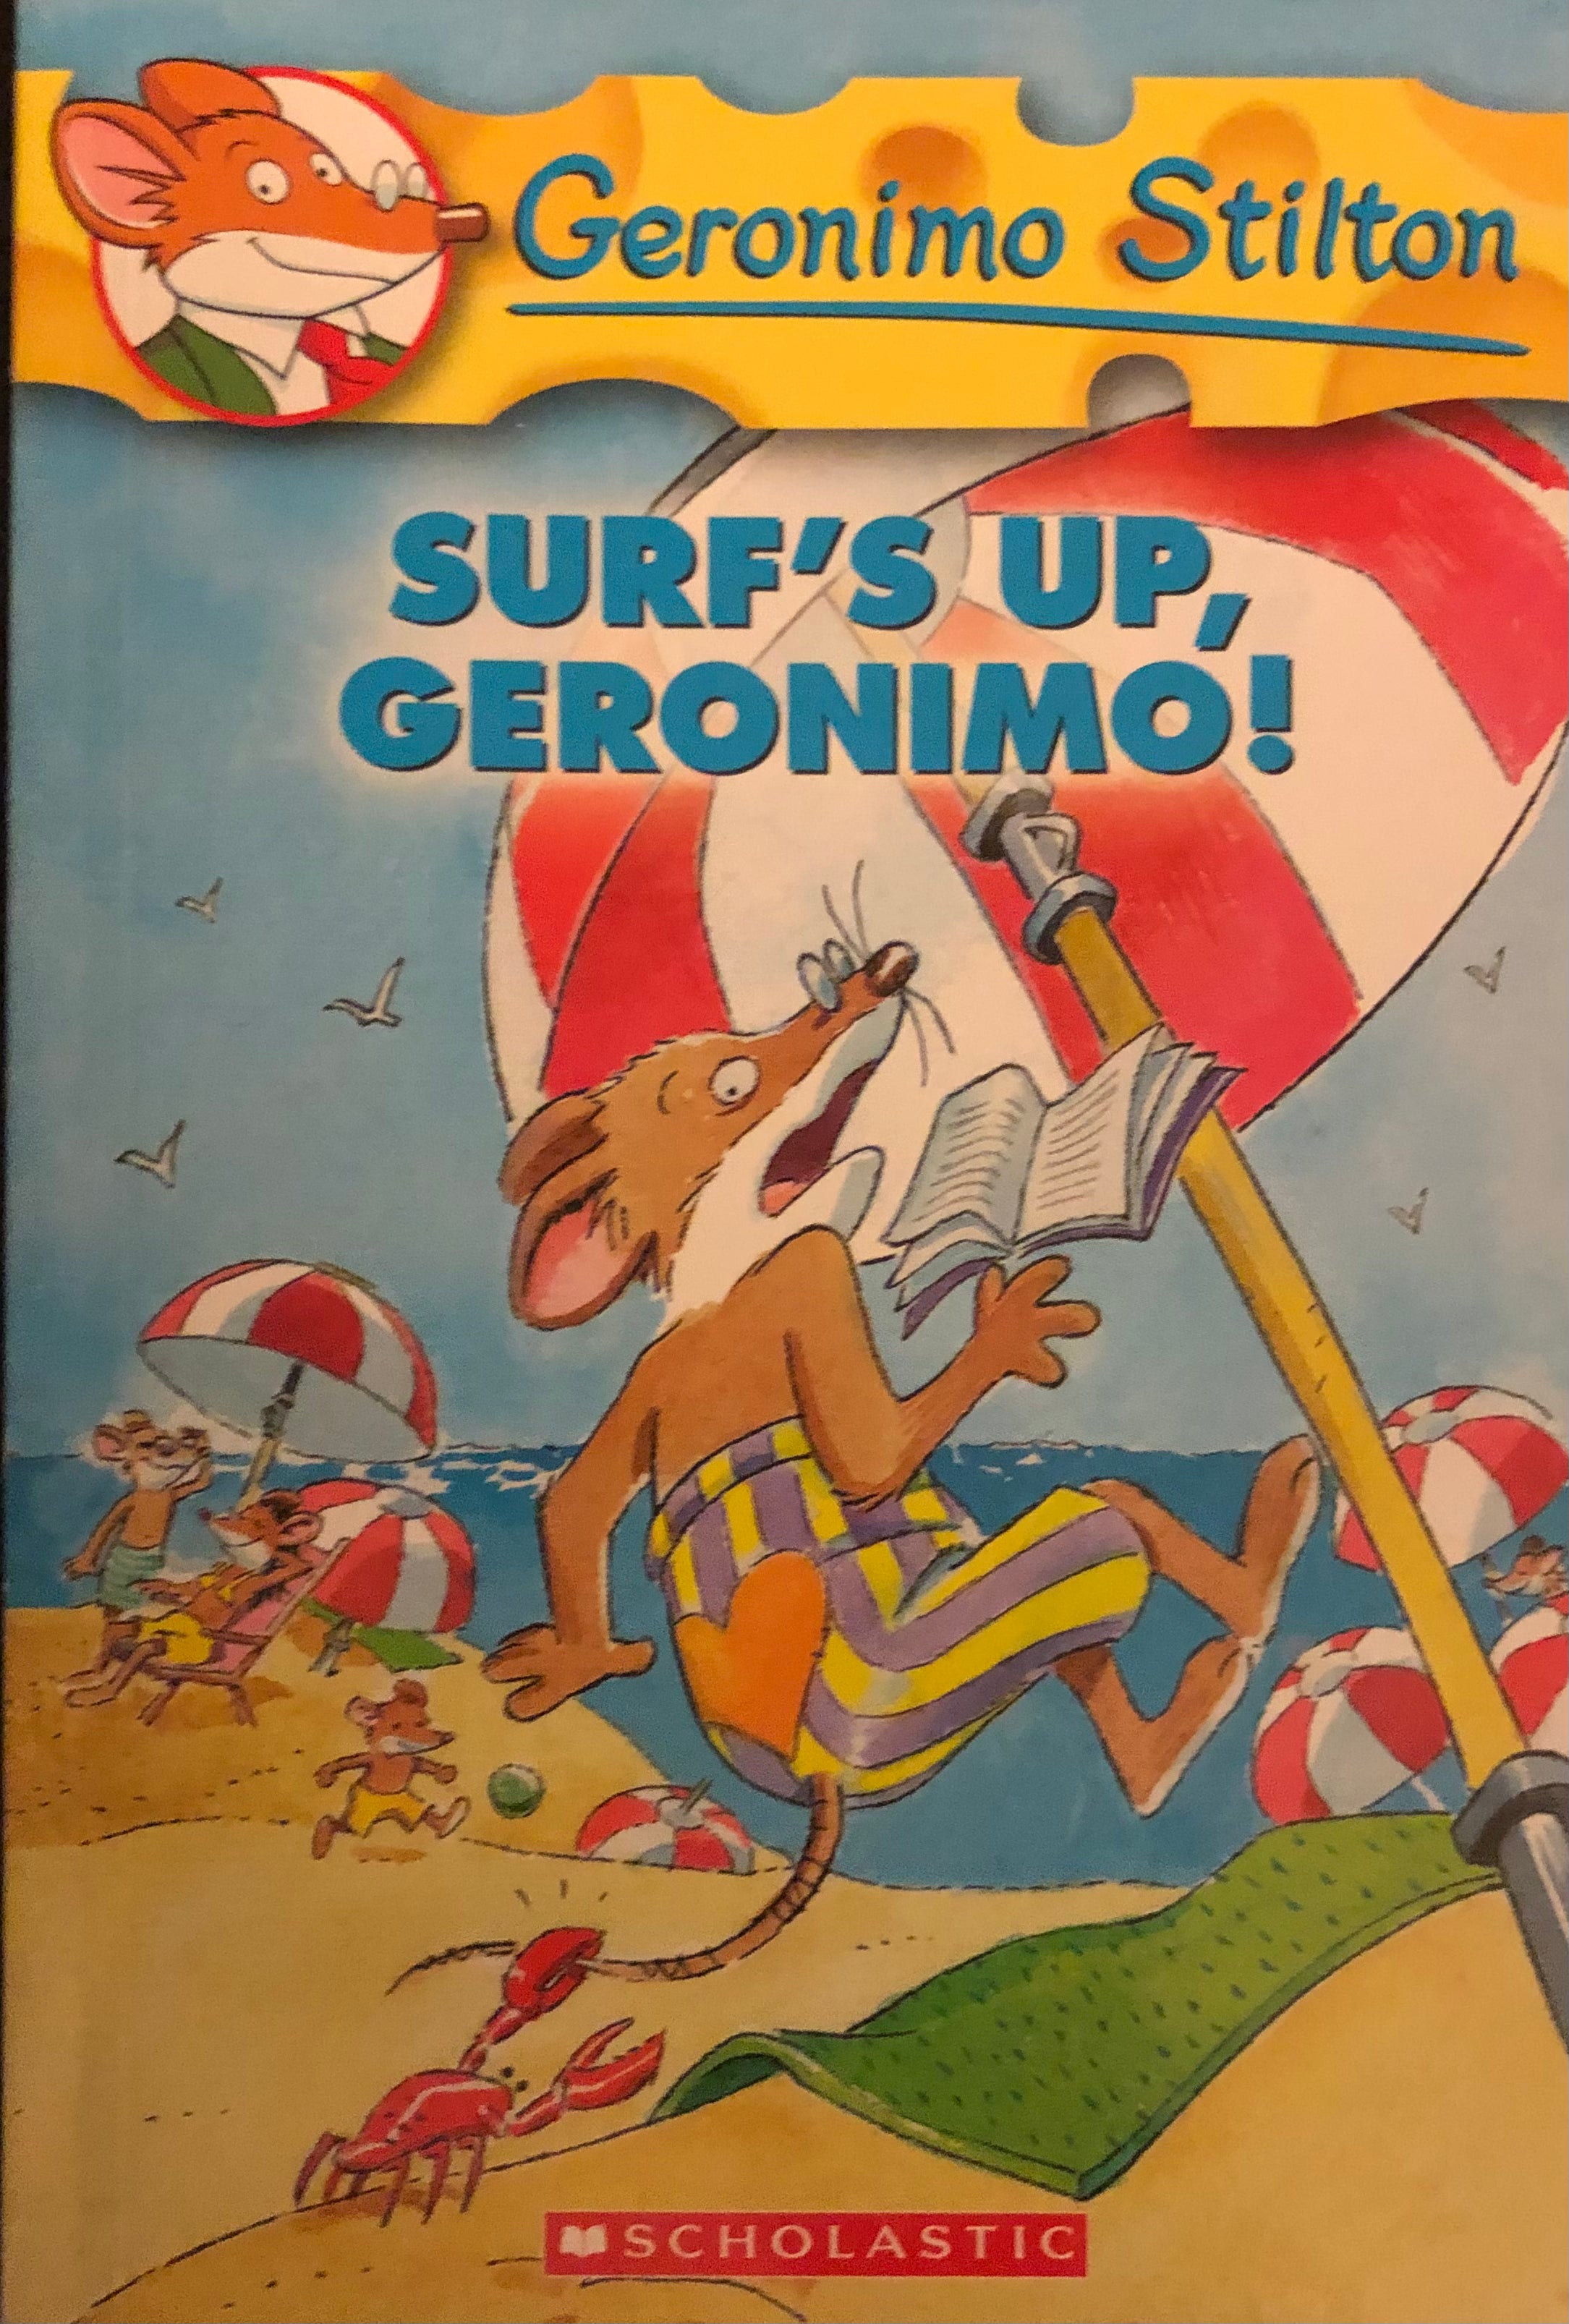 Surf's Up, Geronimo! (Geronimo Stilton, #20) by Geronimo Stilton